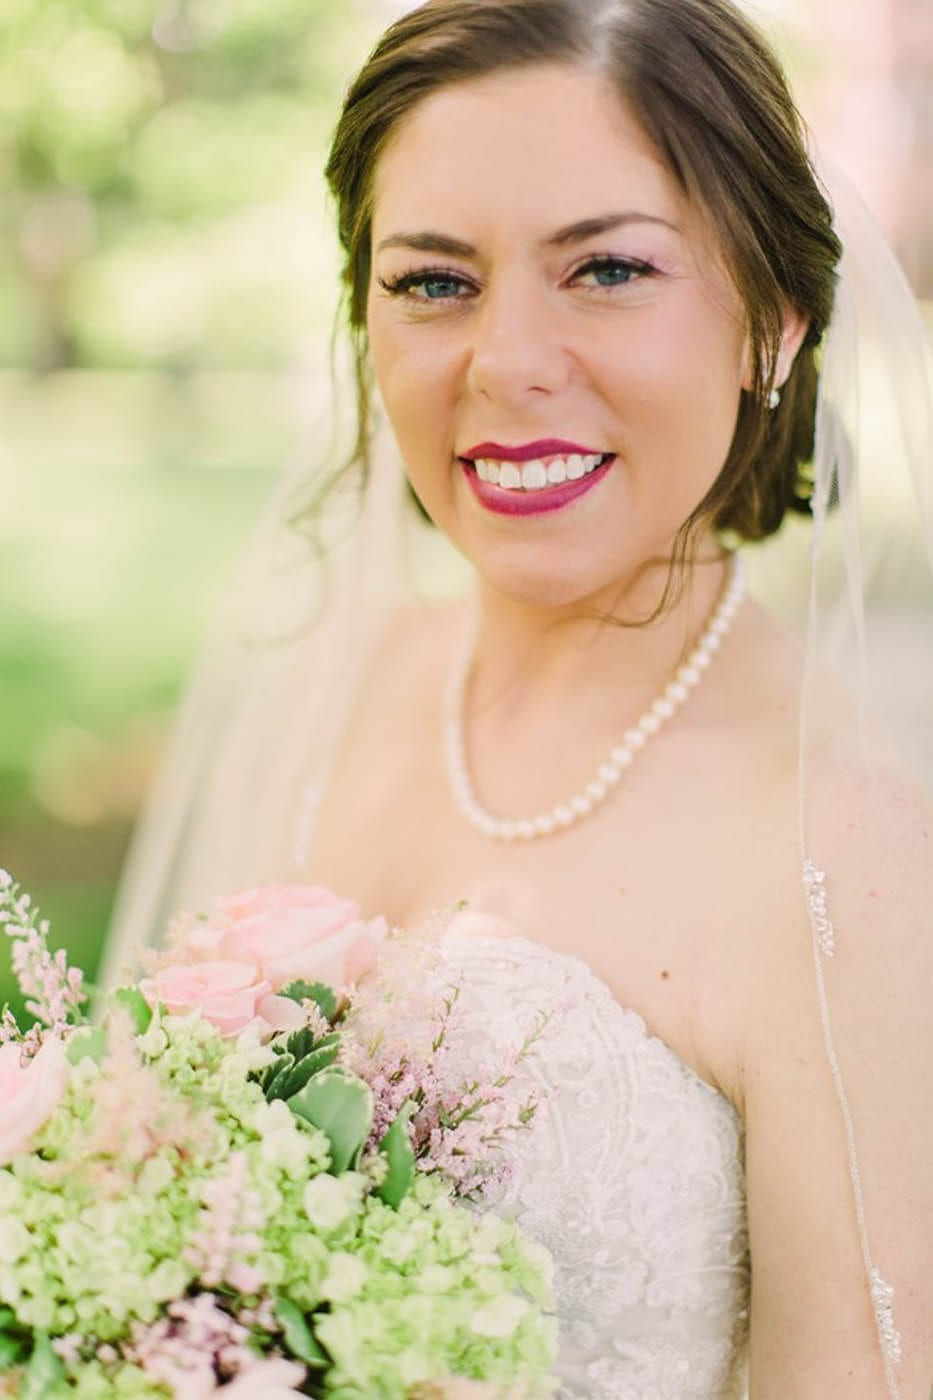 Bride posing with bouquet.